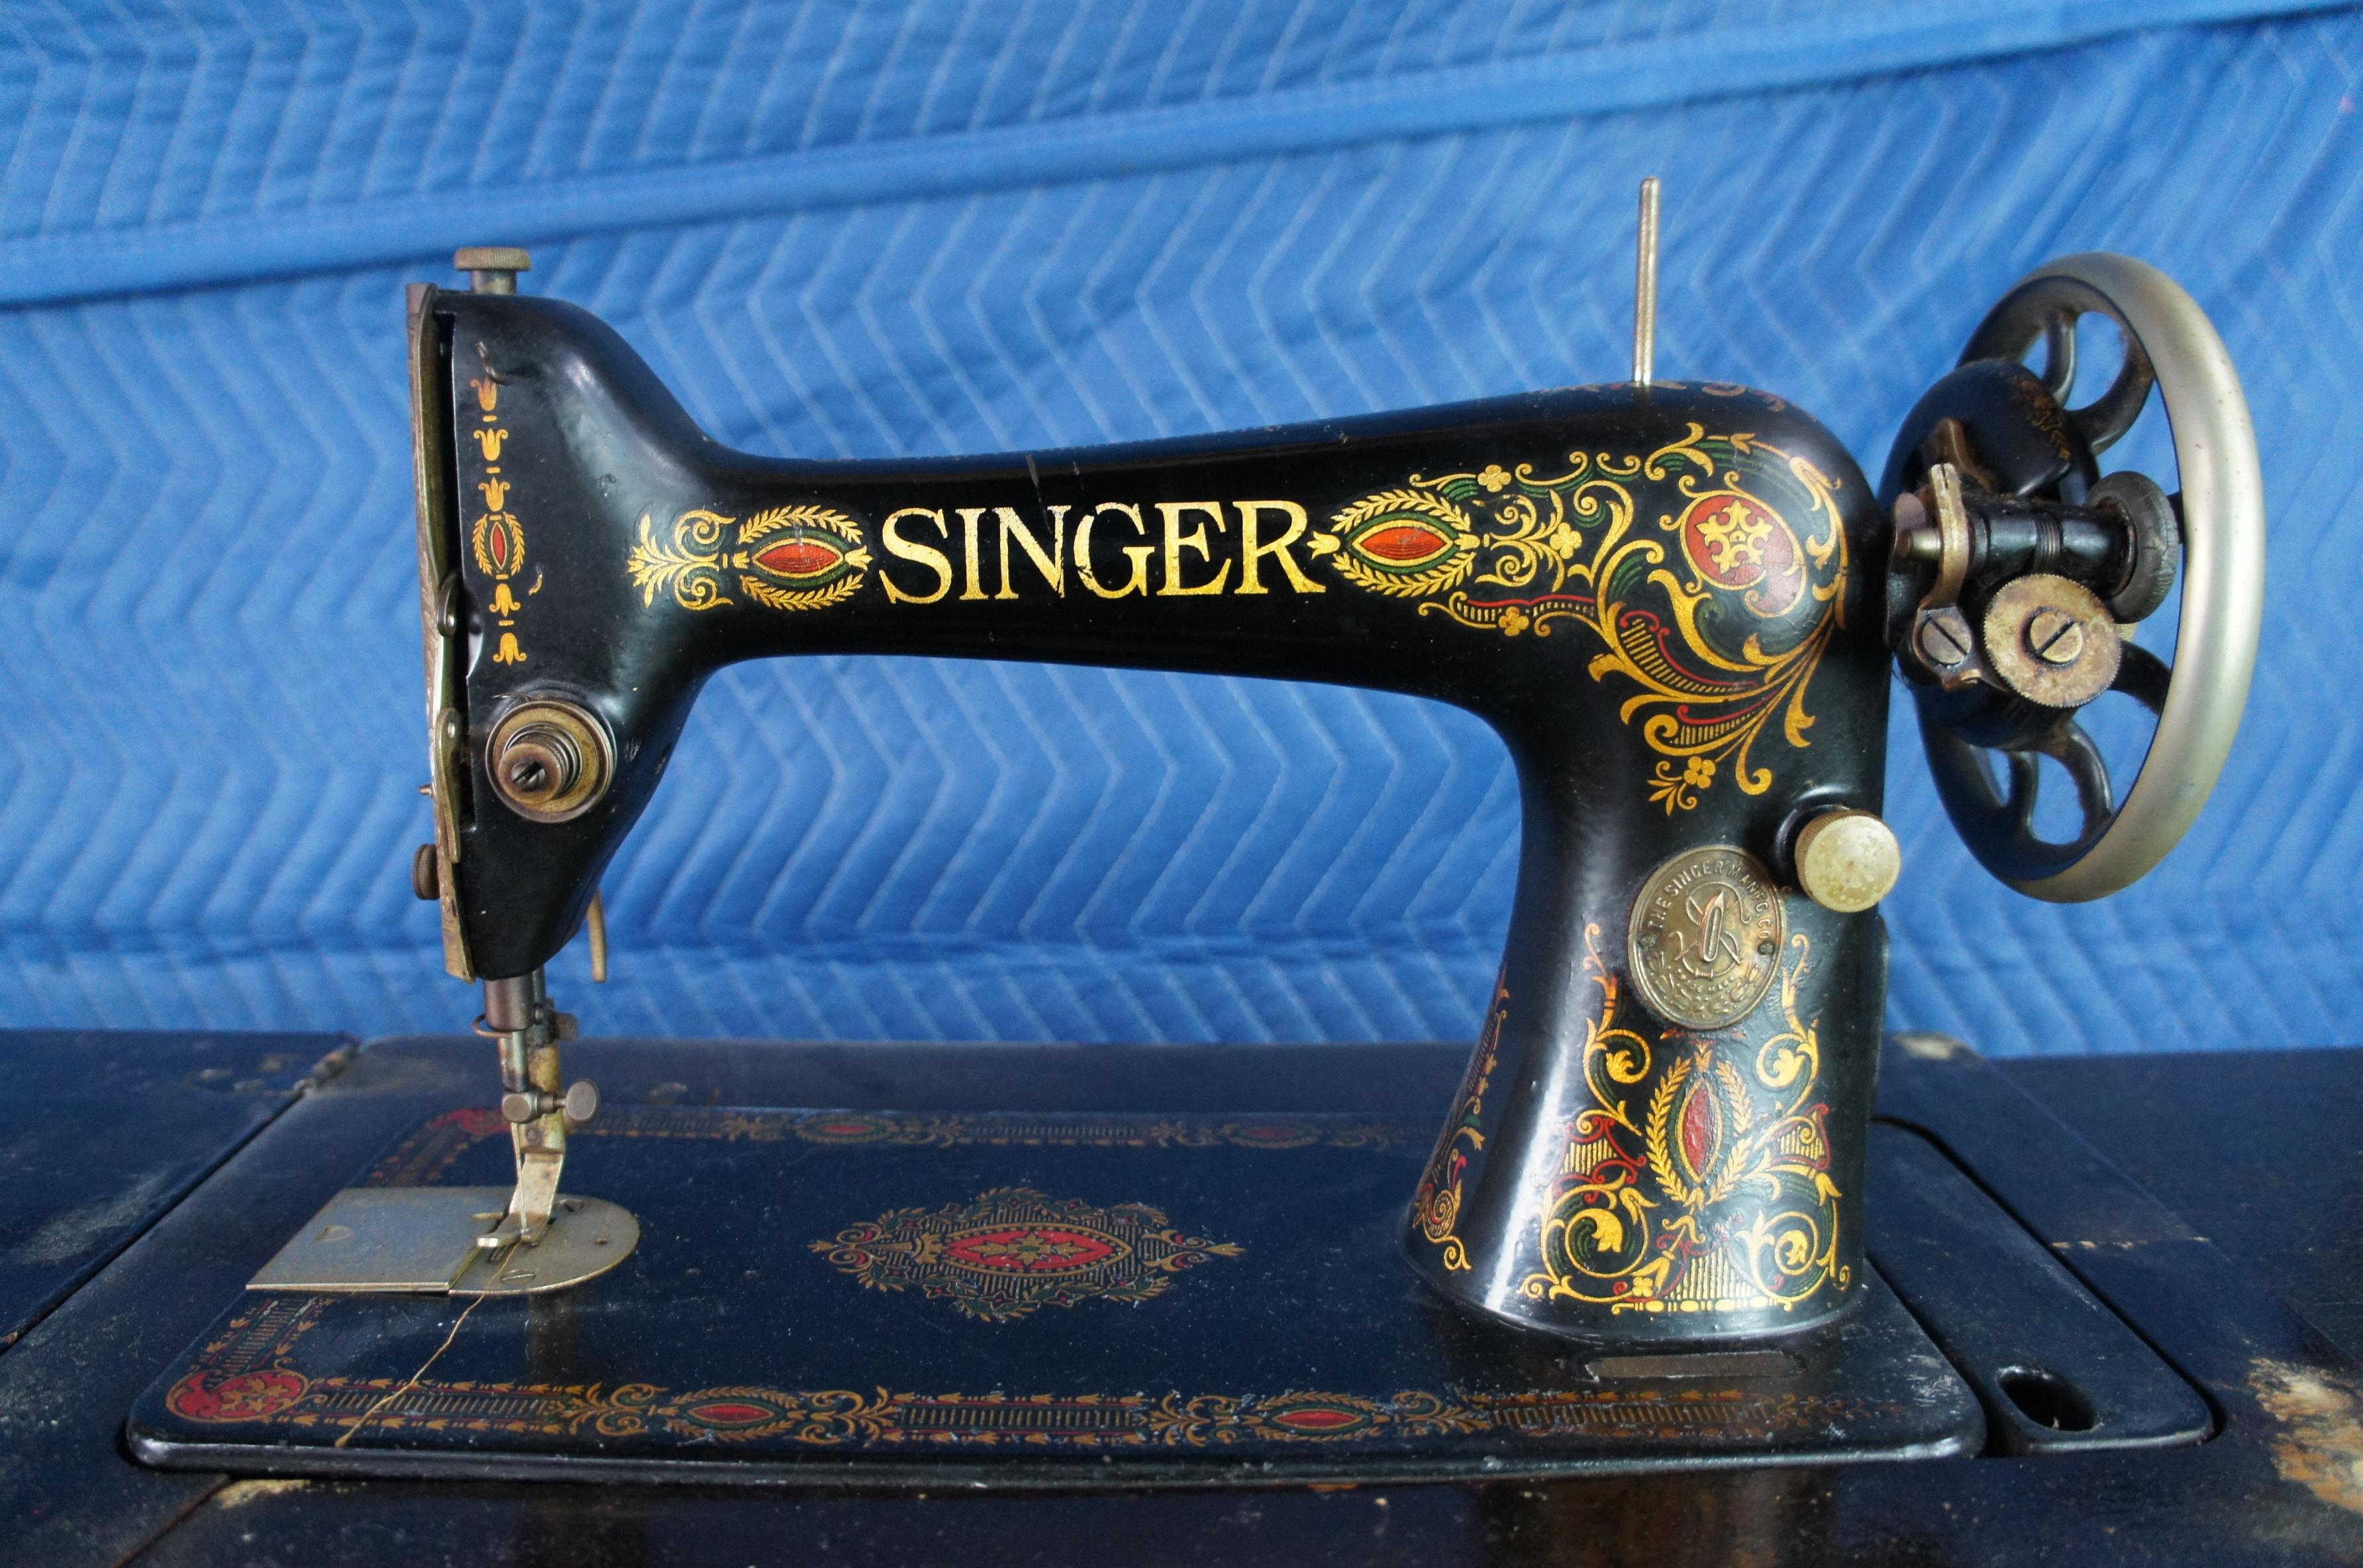 1919 singer sewing machine value